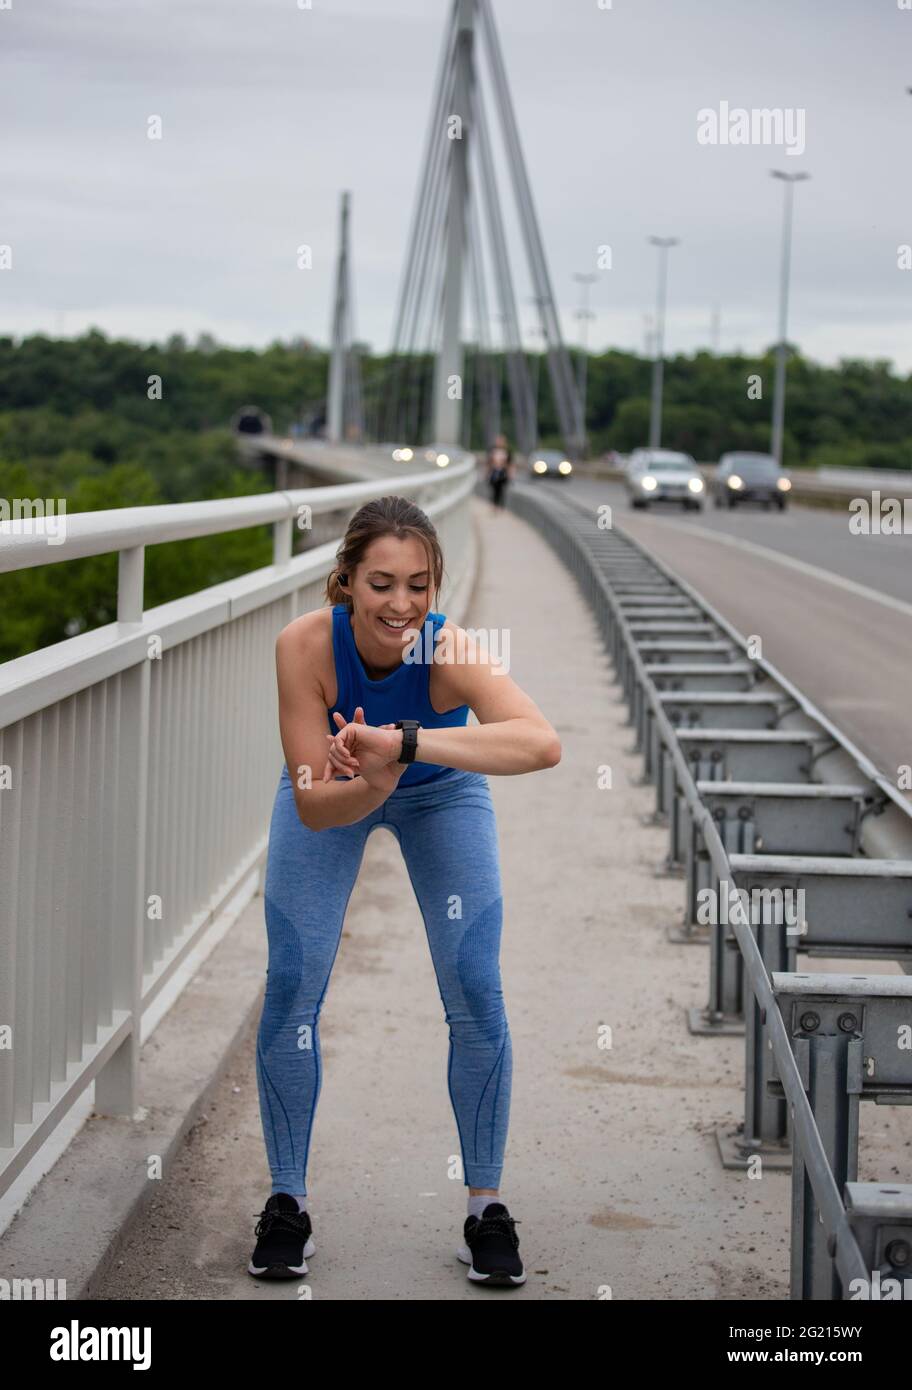 Fit girl bending setting smart watch on bridge. Young athlete jogging exercising. Stock Photo